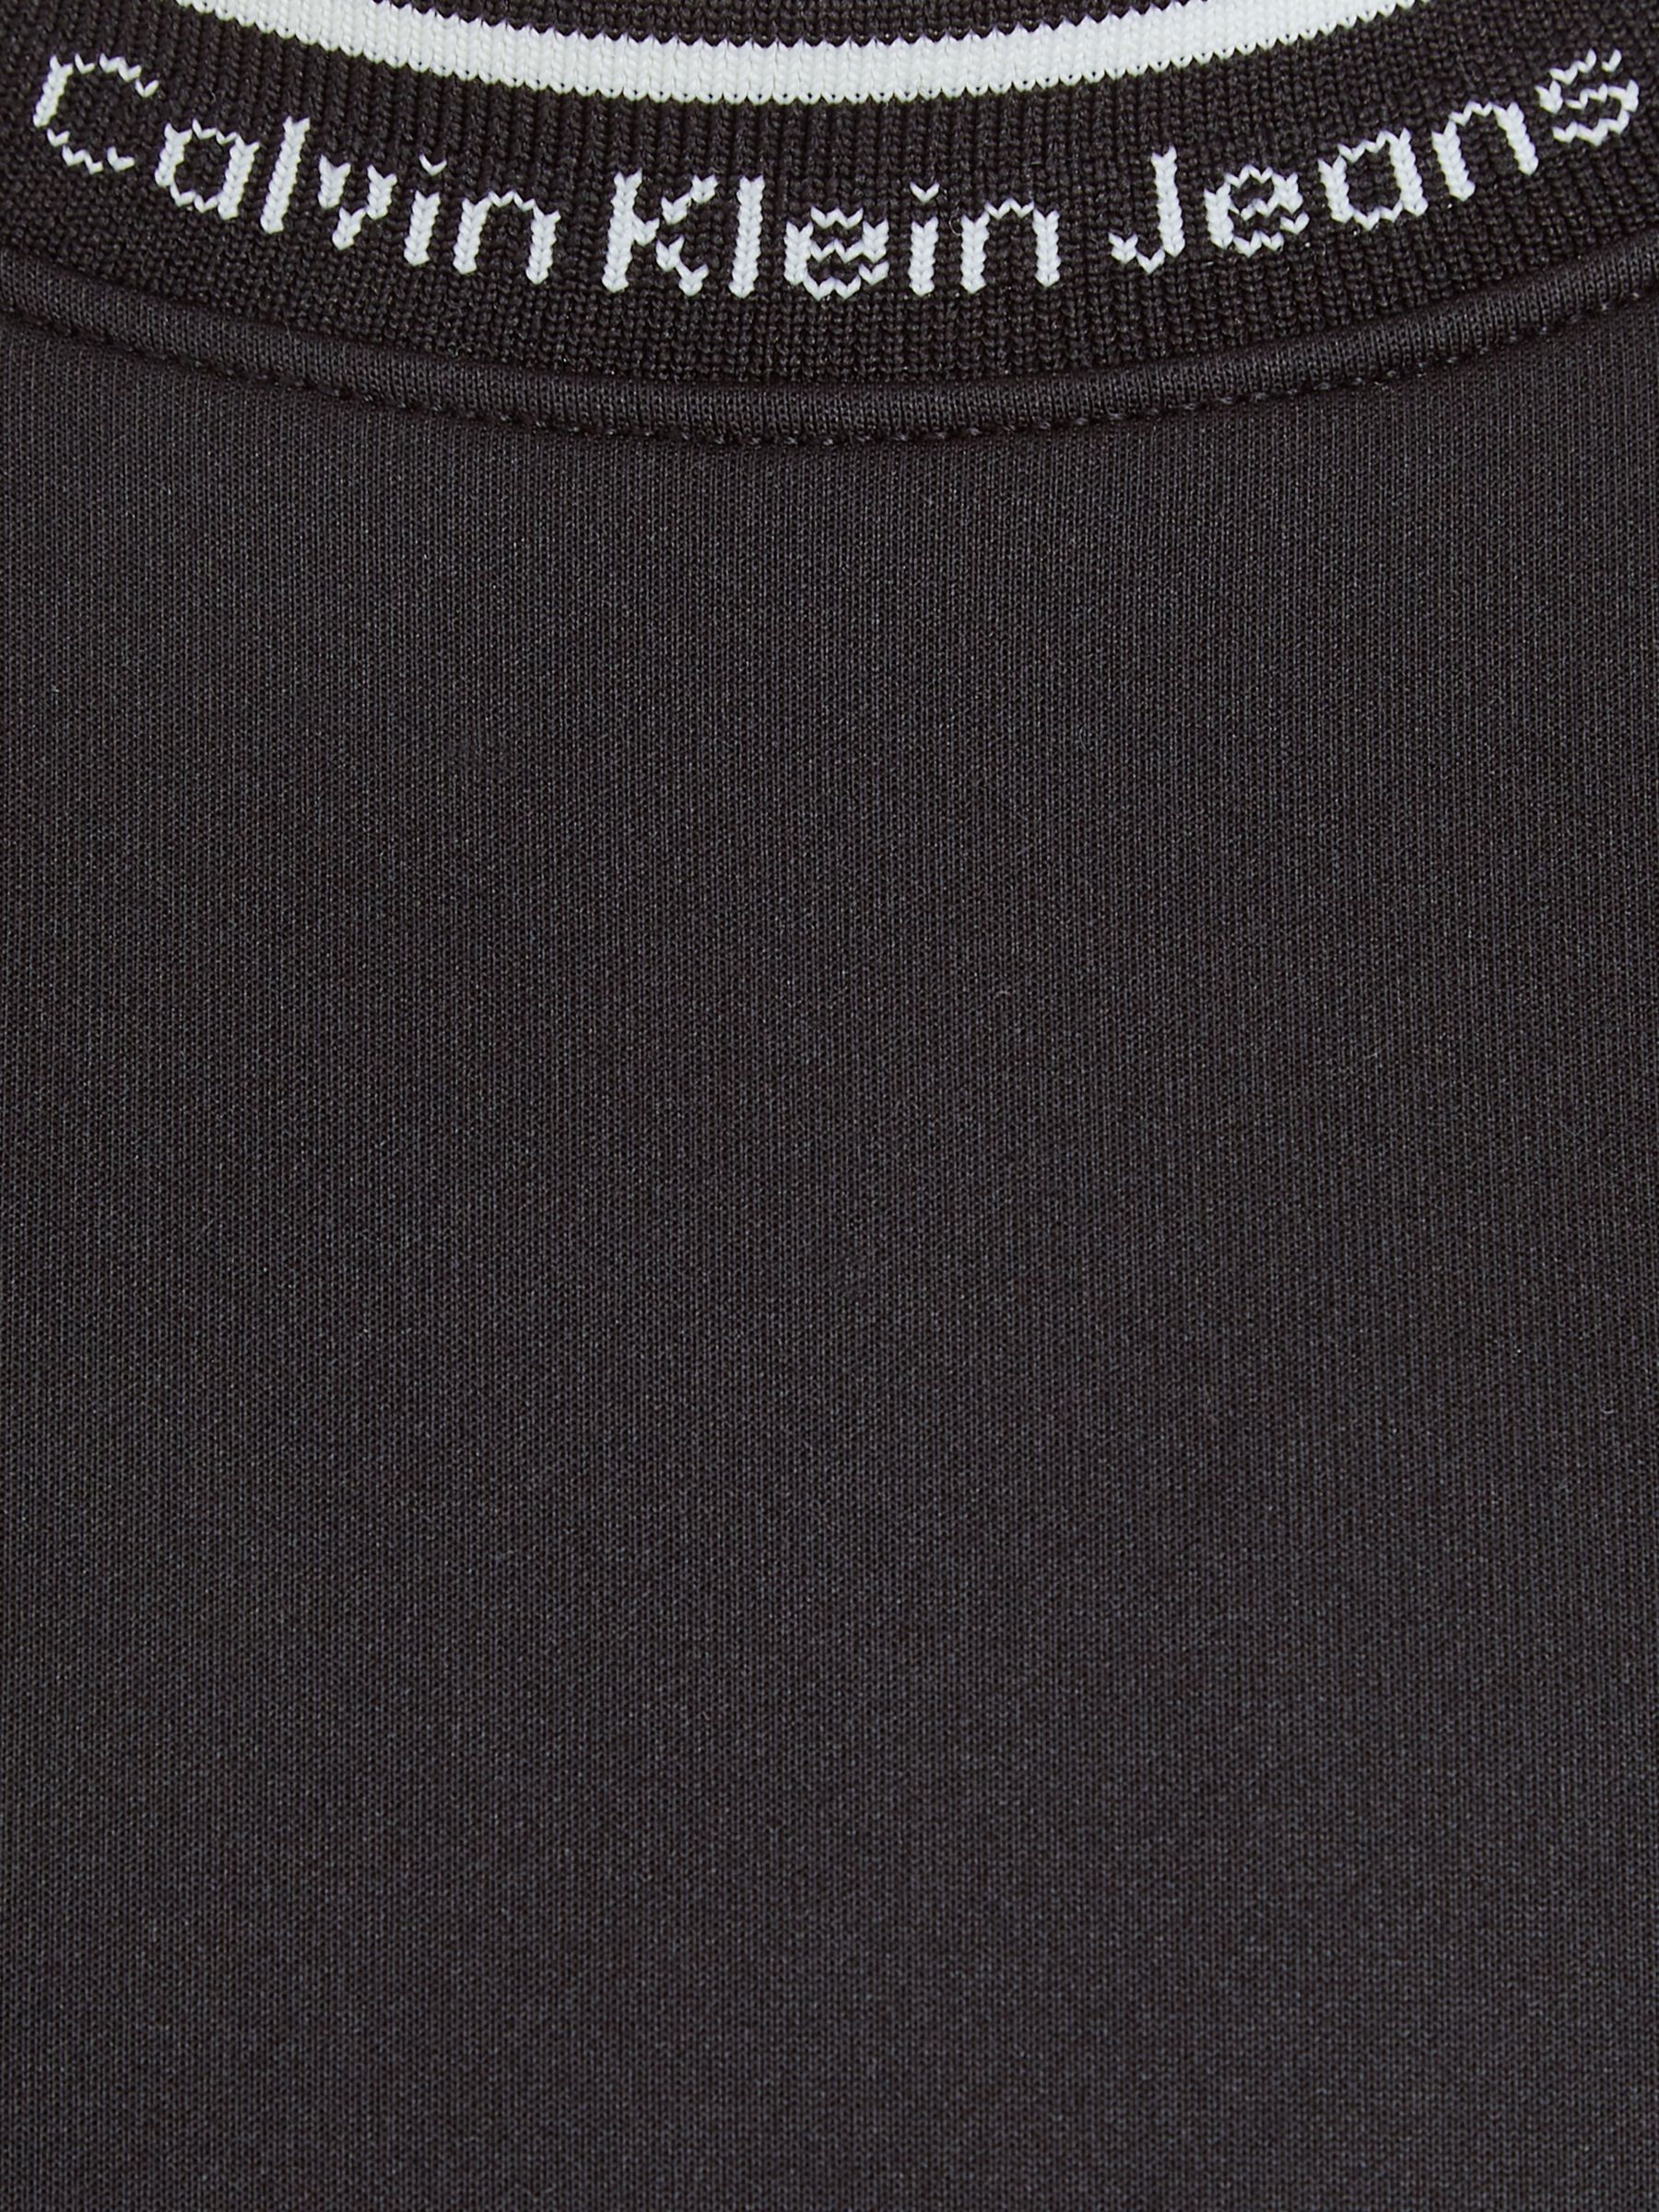 Calvin Klein Kids' Shine Logo Tape Dress, Ck Black, 10 years